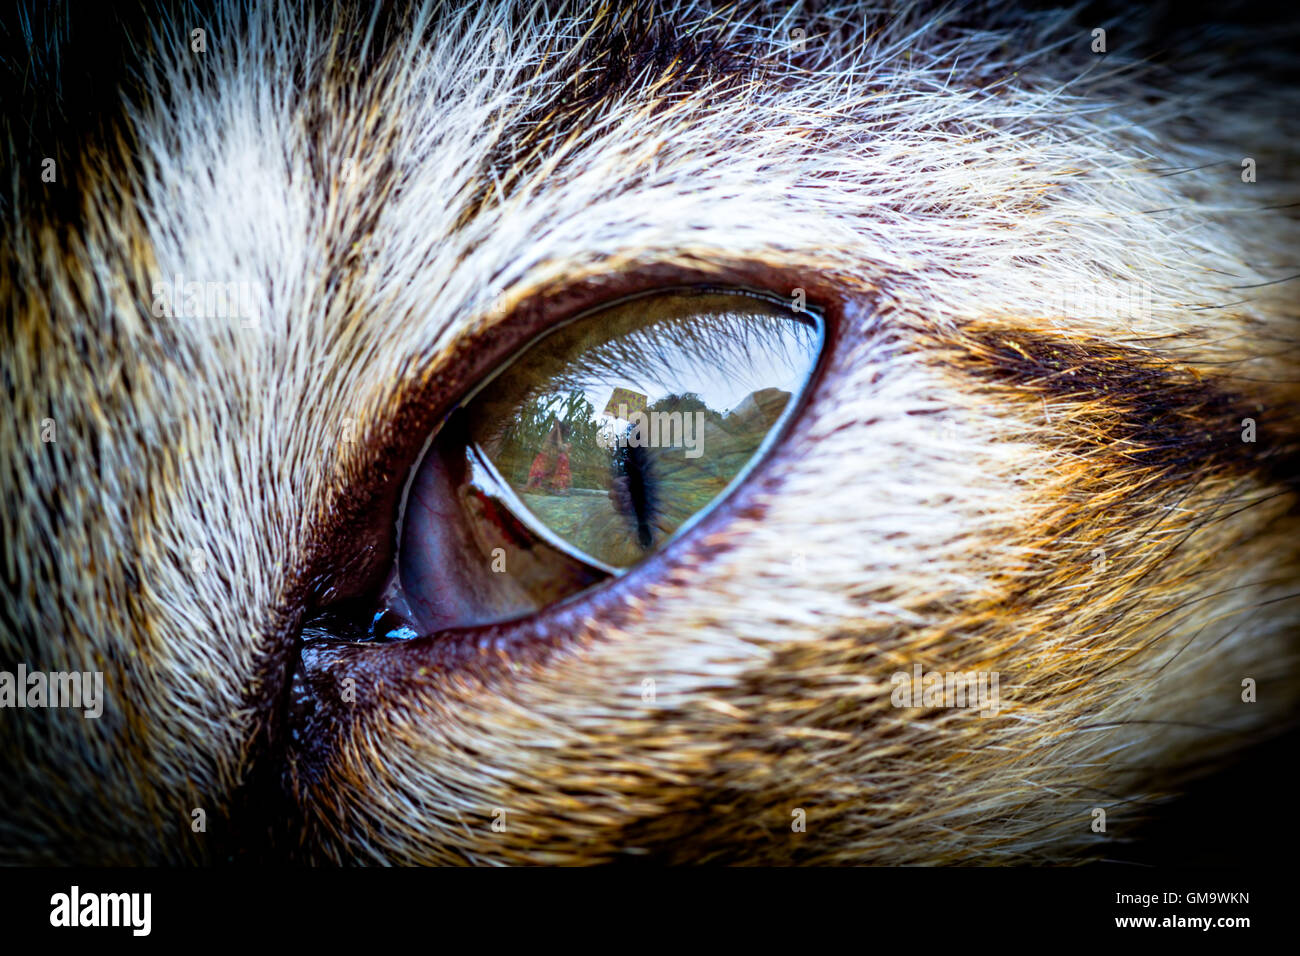 close up of an eye of a kitten Stock Photo